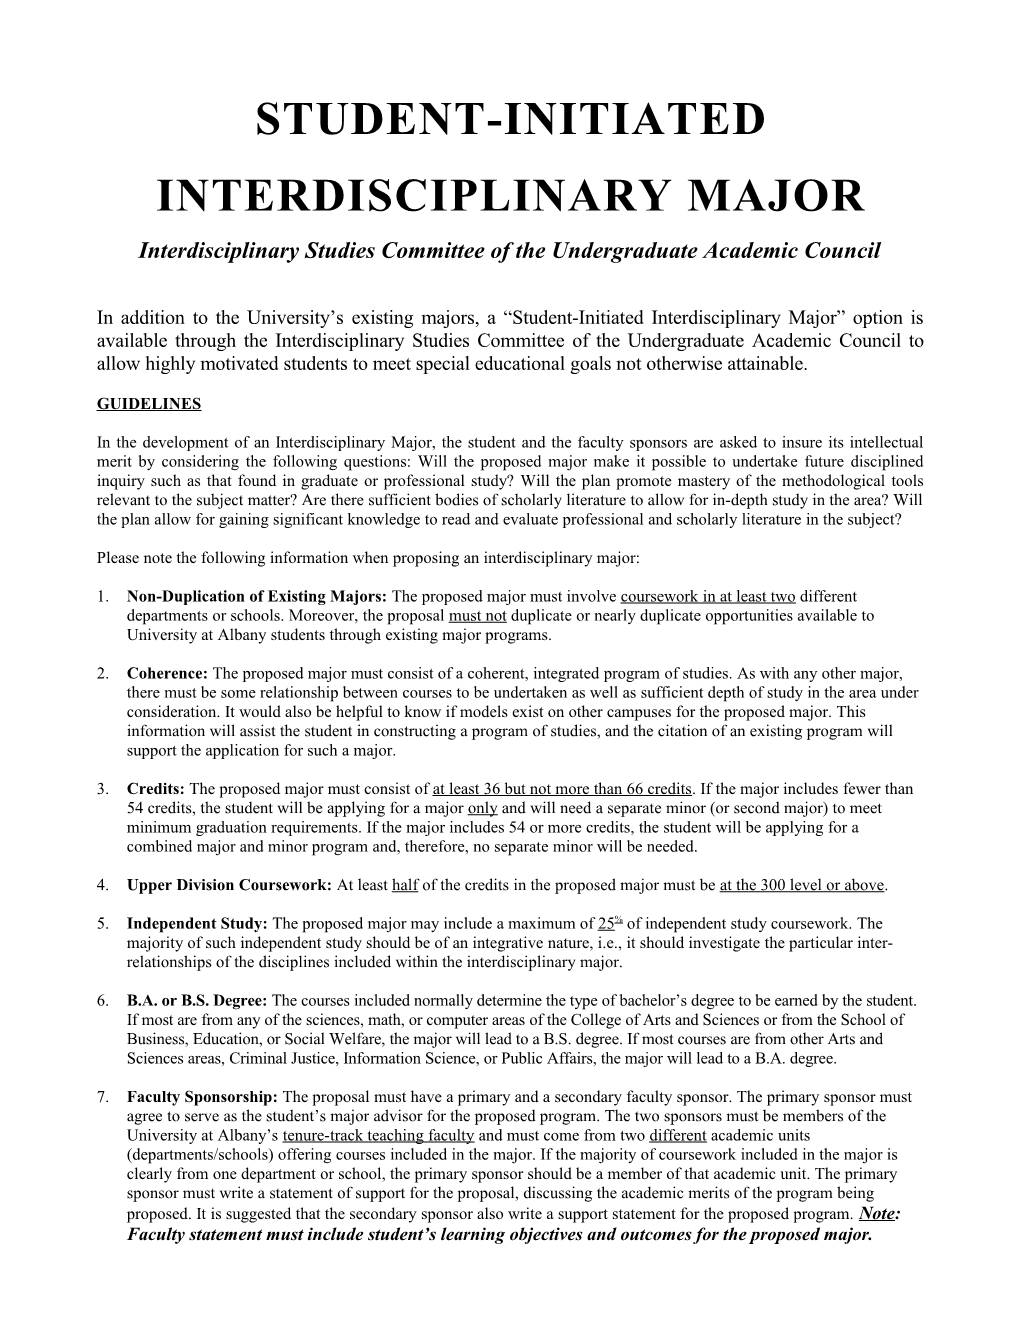 Interdisciplinary Studies Committee of the Undergraduate Academic Council